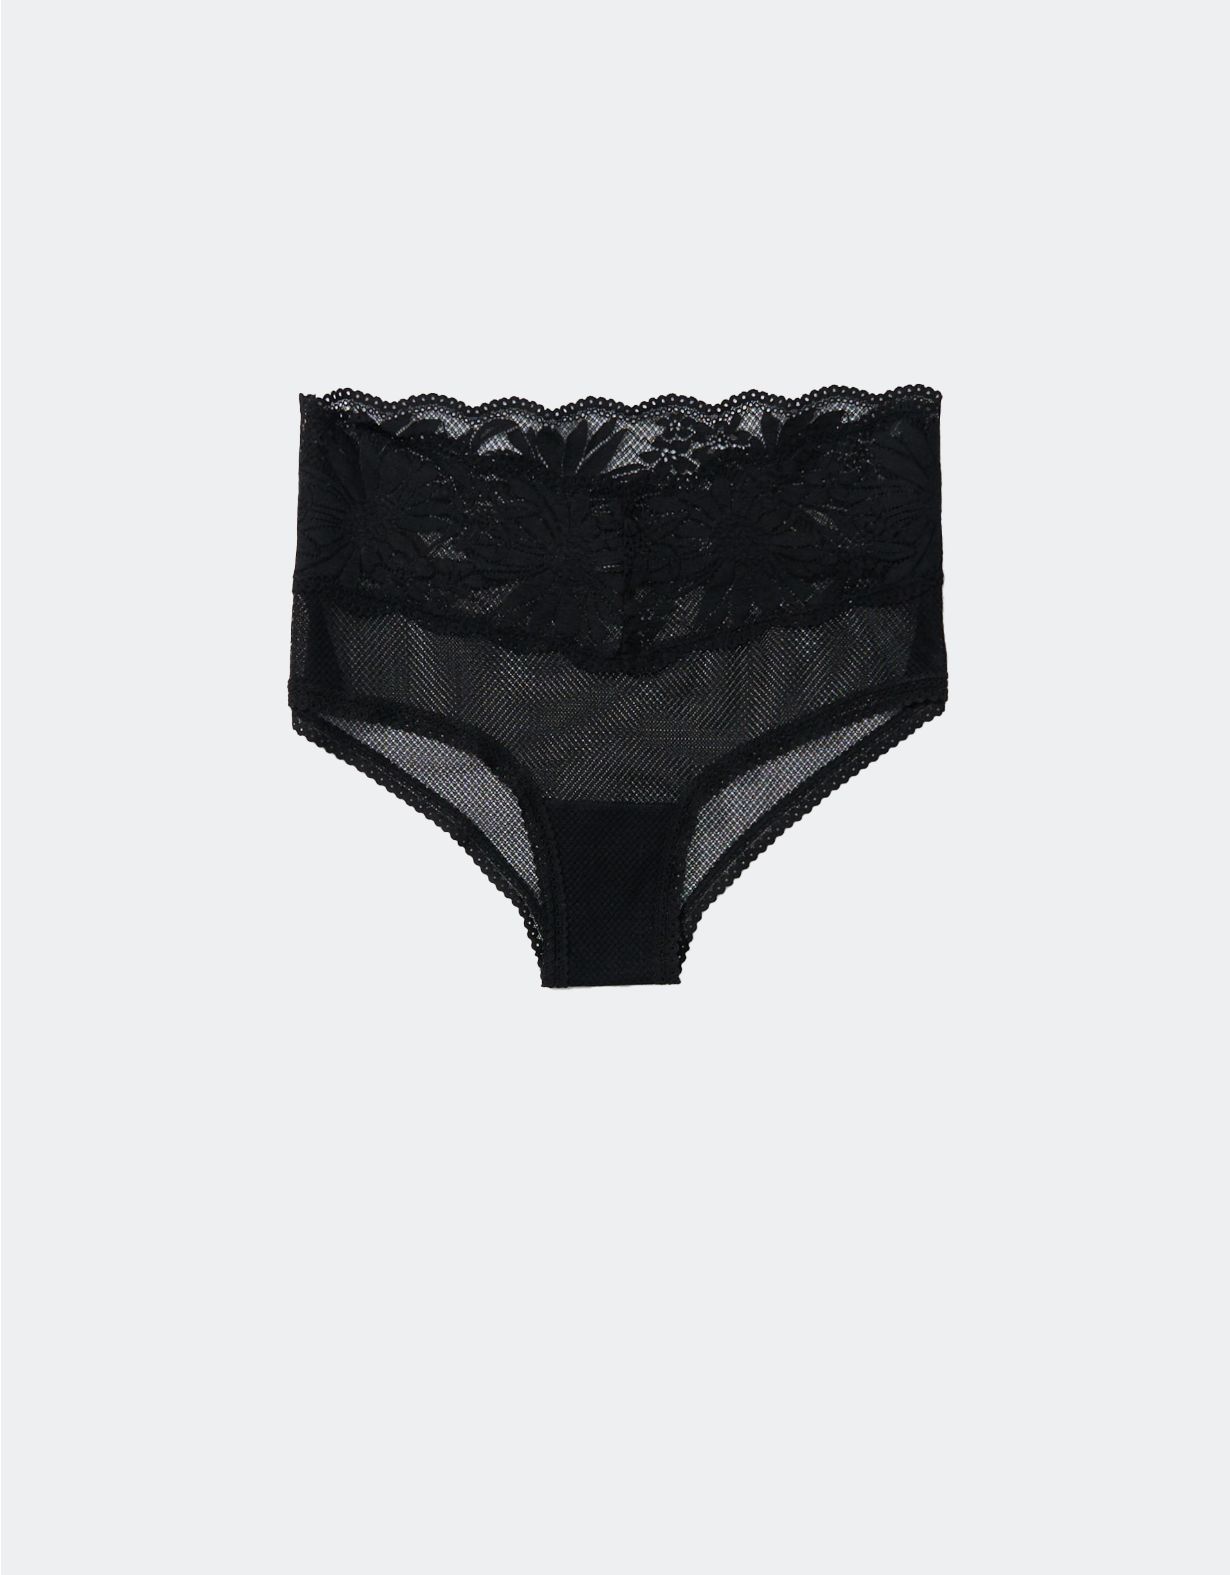 Aerie Hibiscus Lace Cheeky Underwear